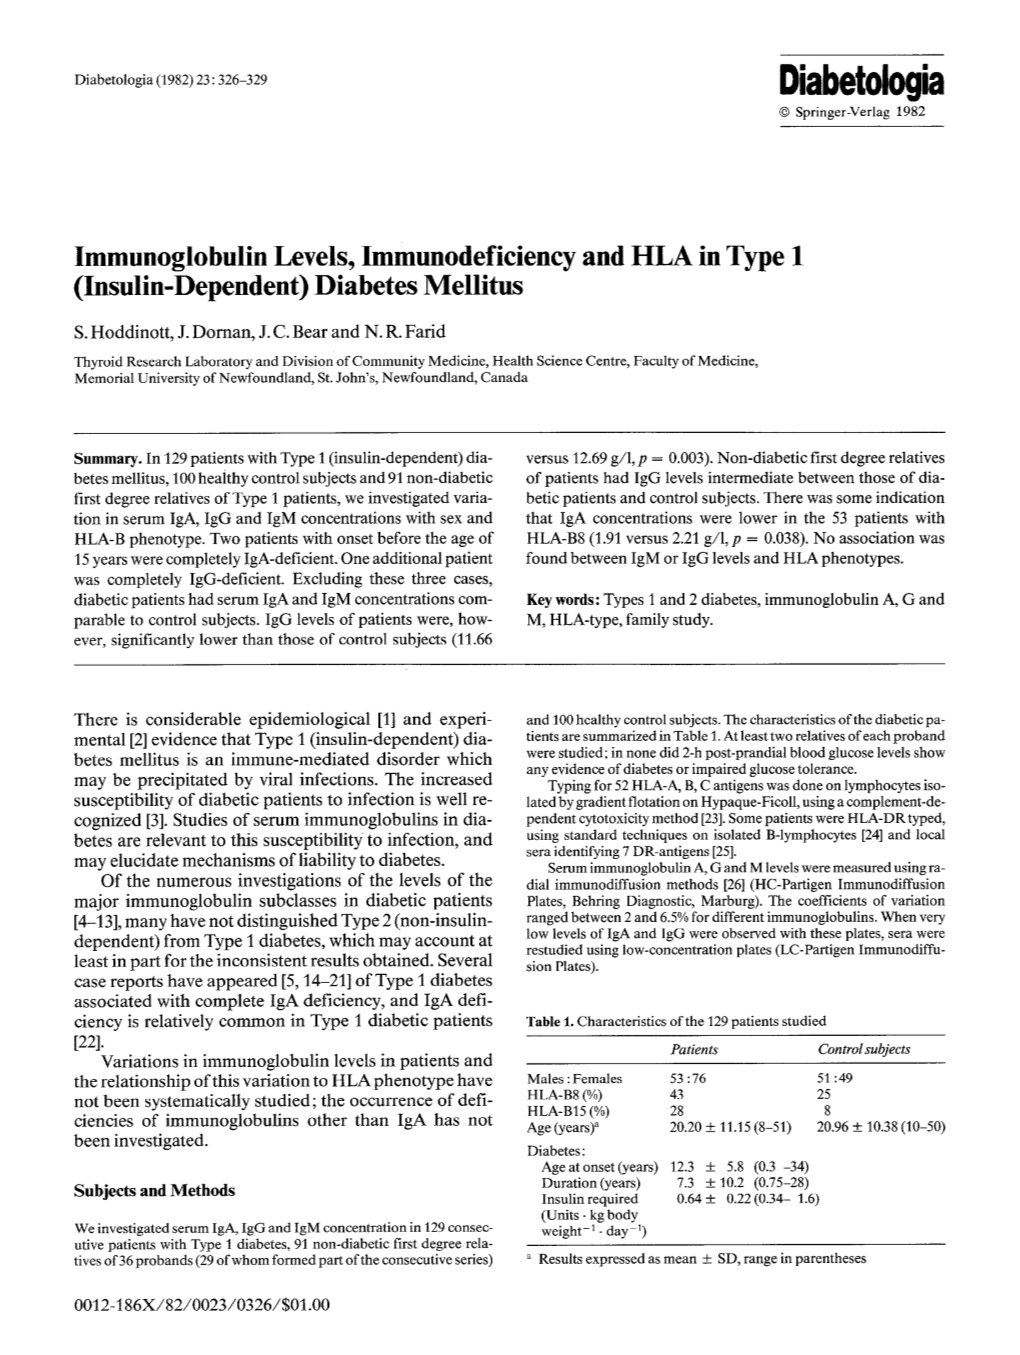 Immunoglobulin Levels, Immunodeficiency and HLA in Type 1 (Insulin-Dependent) Diabetes Mellitus